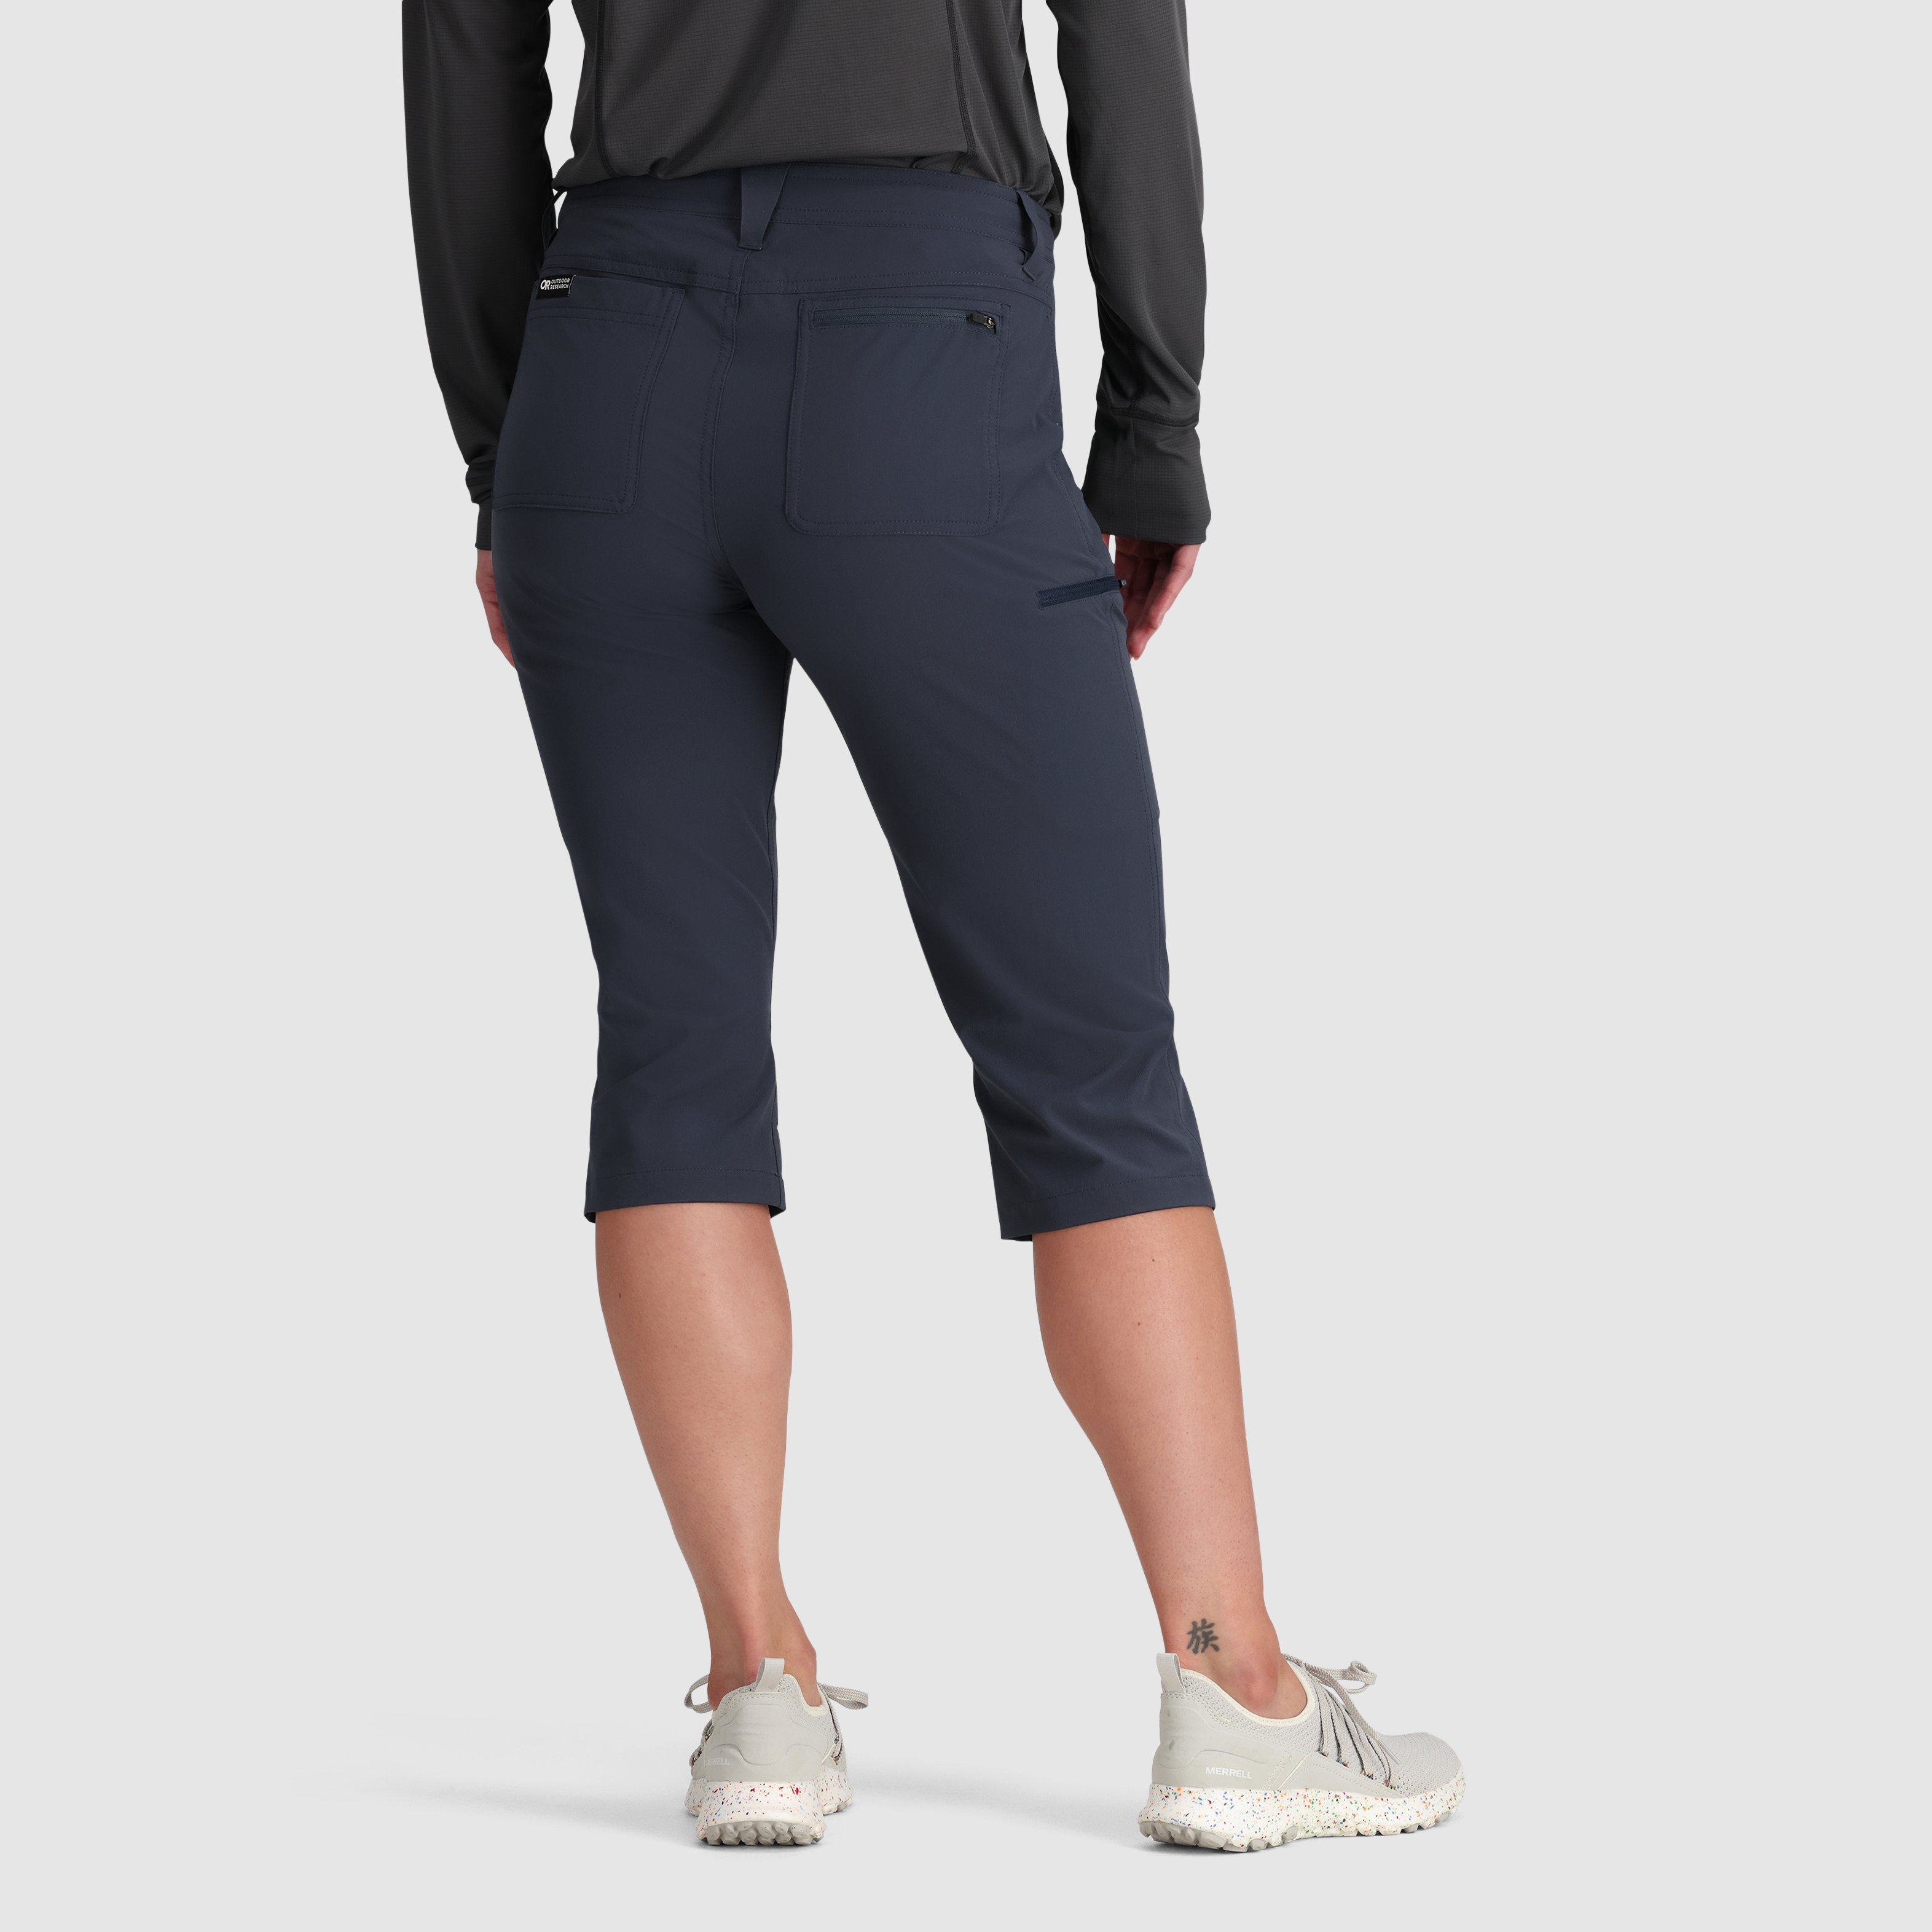 Womens Capri Cargo Pants with Pockets Yoga Capris Hiking Pants Outdoor  Travel Lightweight Stretch Running Pants - Walmart.com